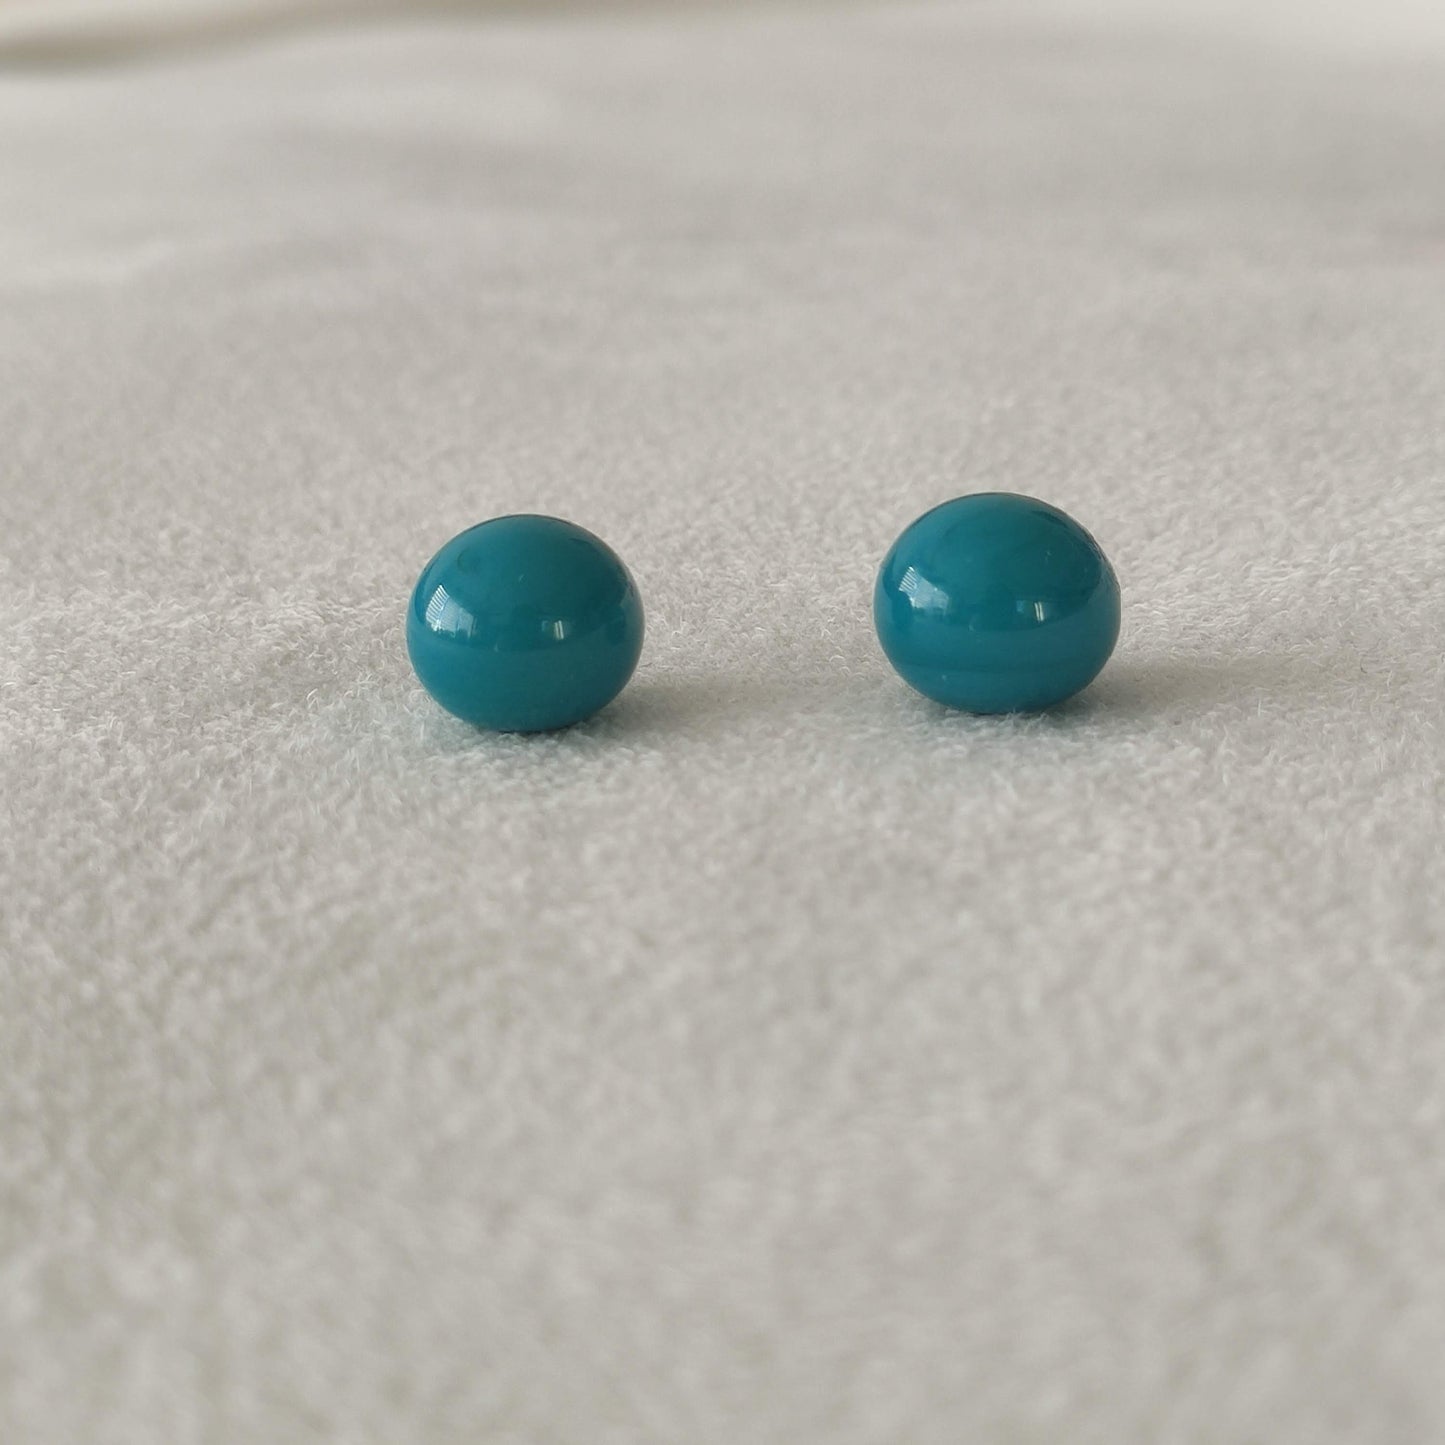 Duo de perles turquoises